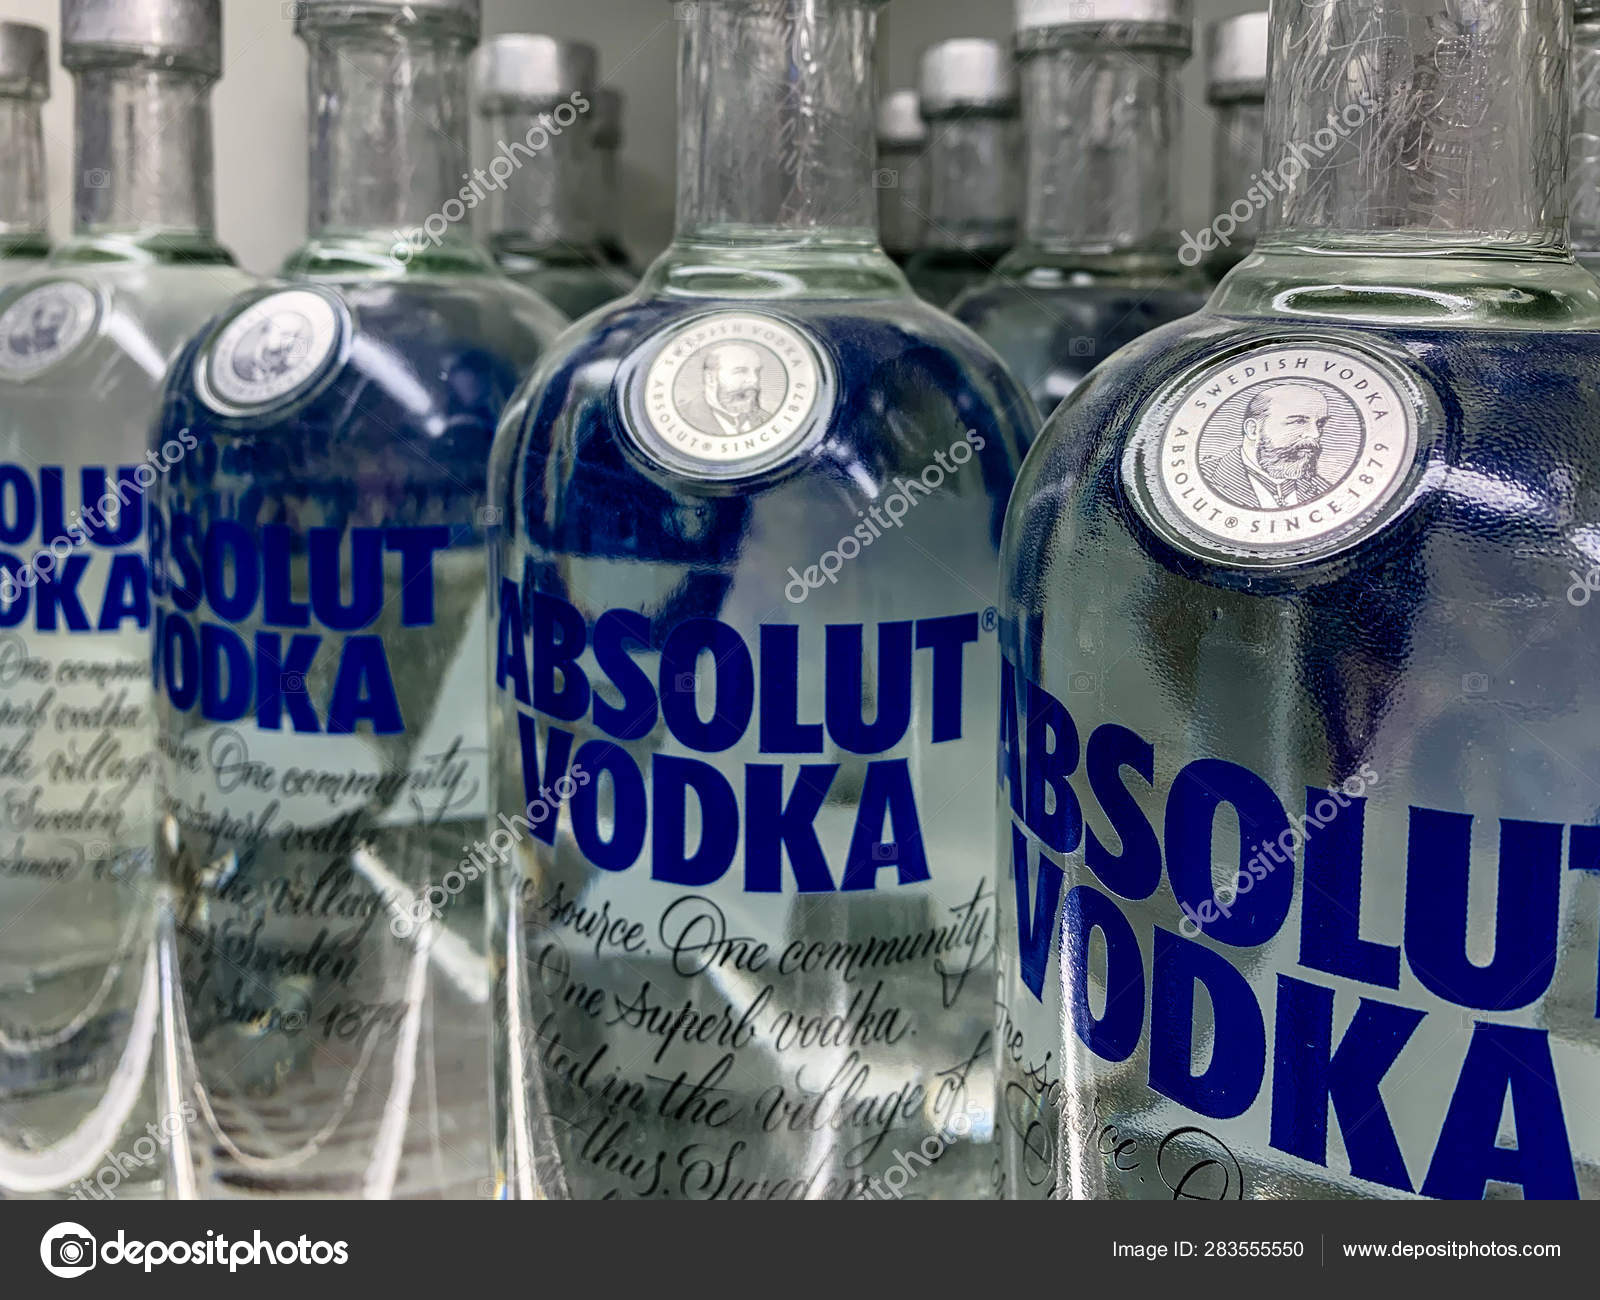 vodka bottles on a shelf in a store absolut vodka is a famous brand of vodka